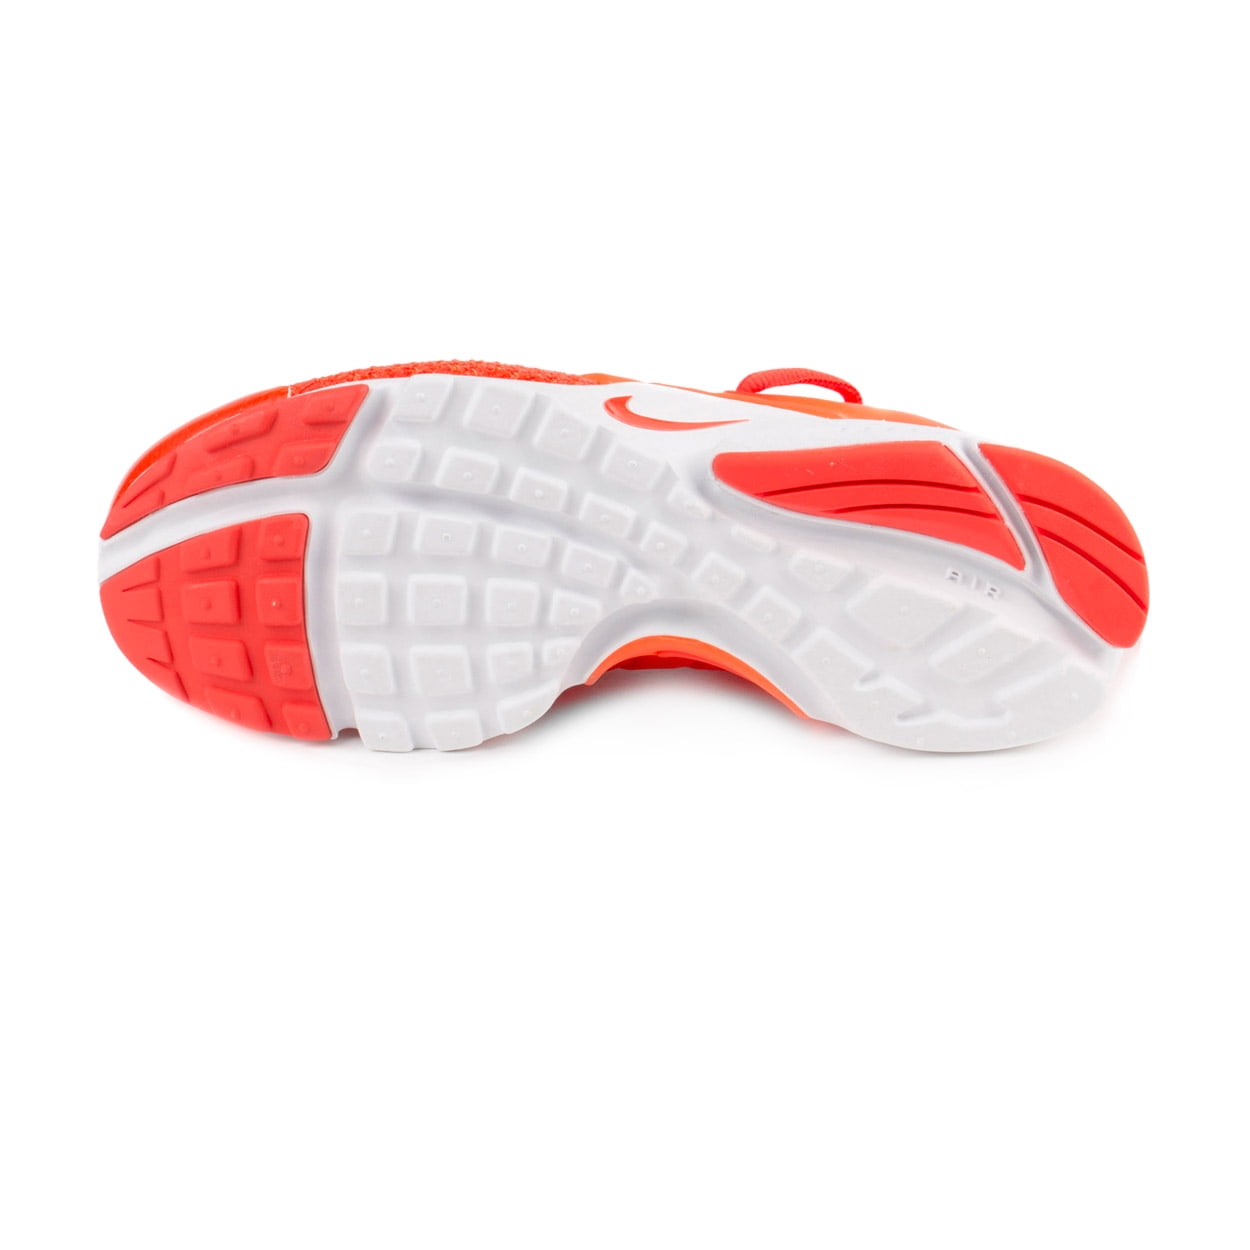 Nike Womens W Air Presto Flyknit Ultra Bright Mango/Bright Crimson - Walmart.com